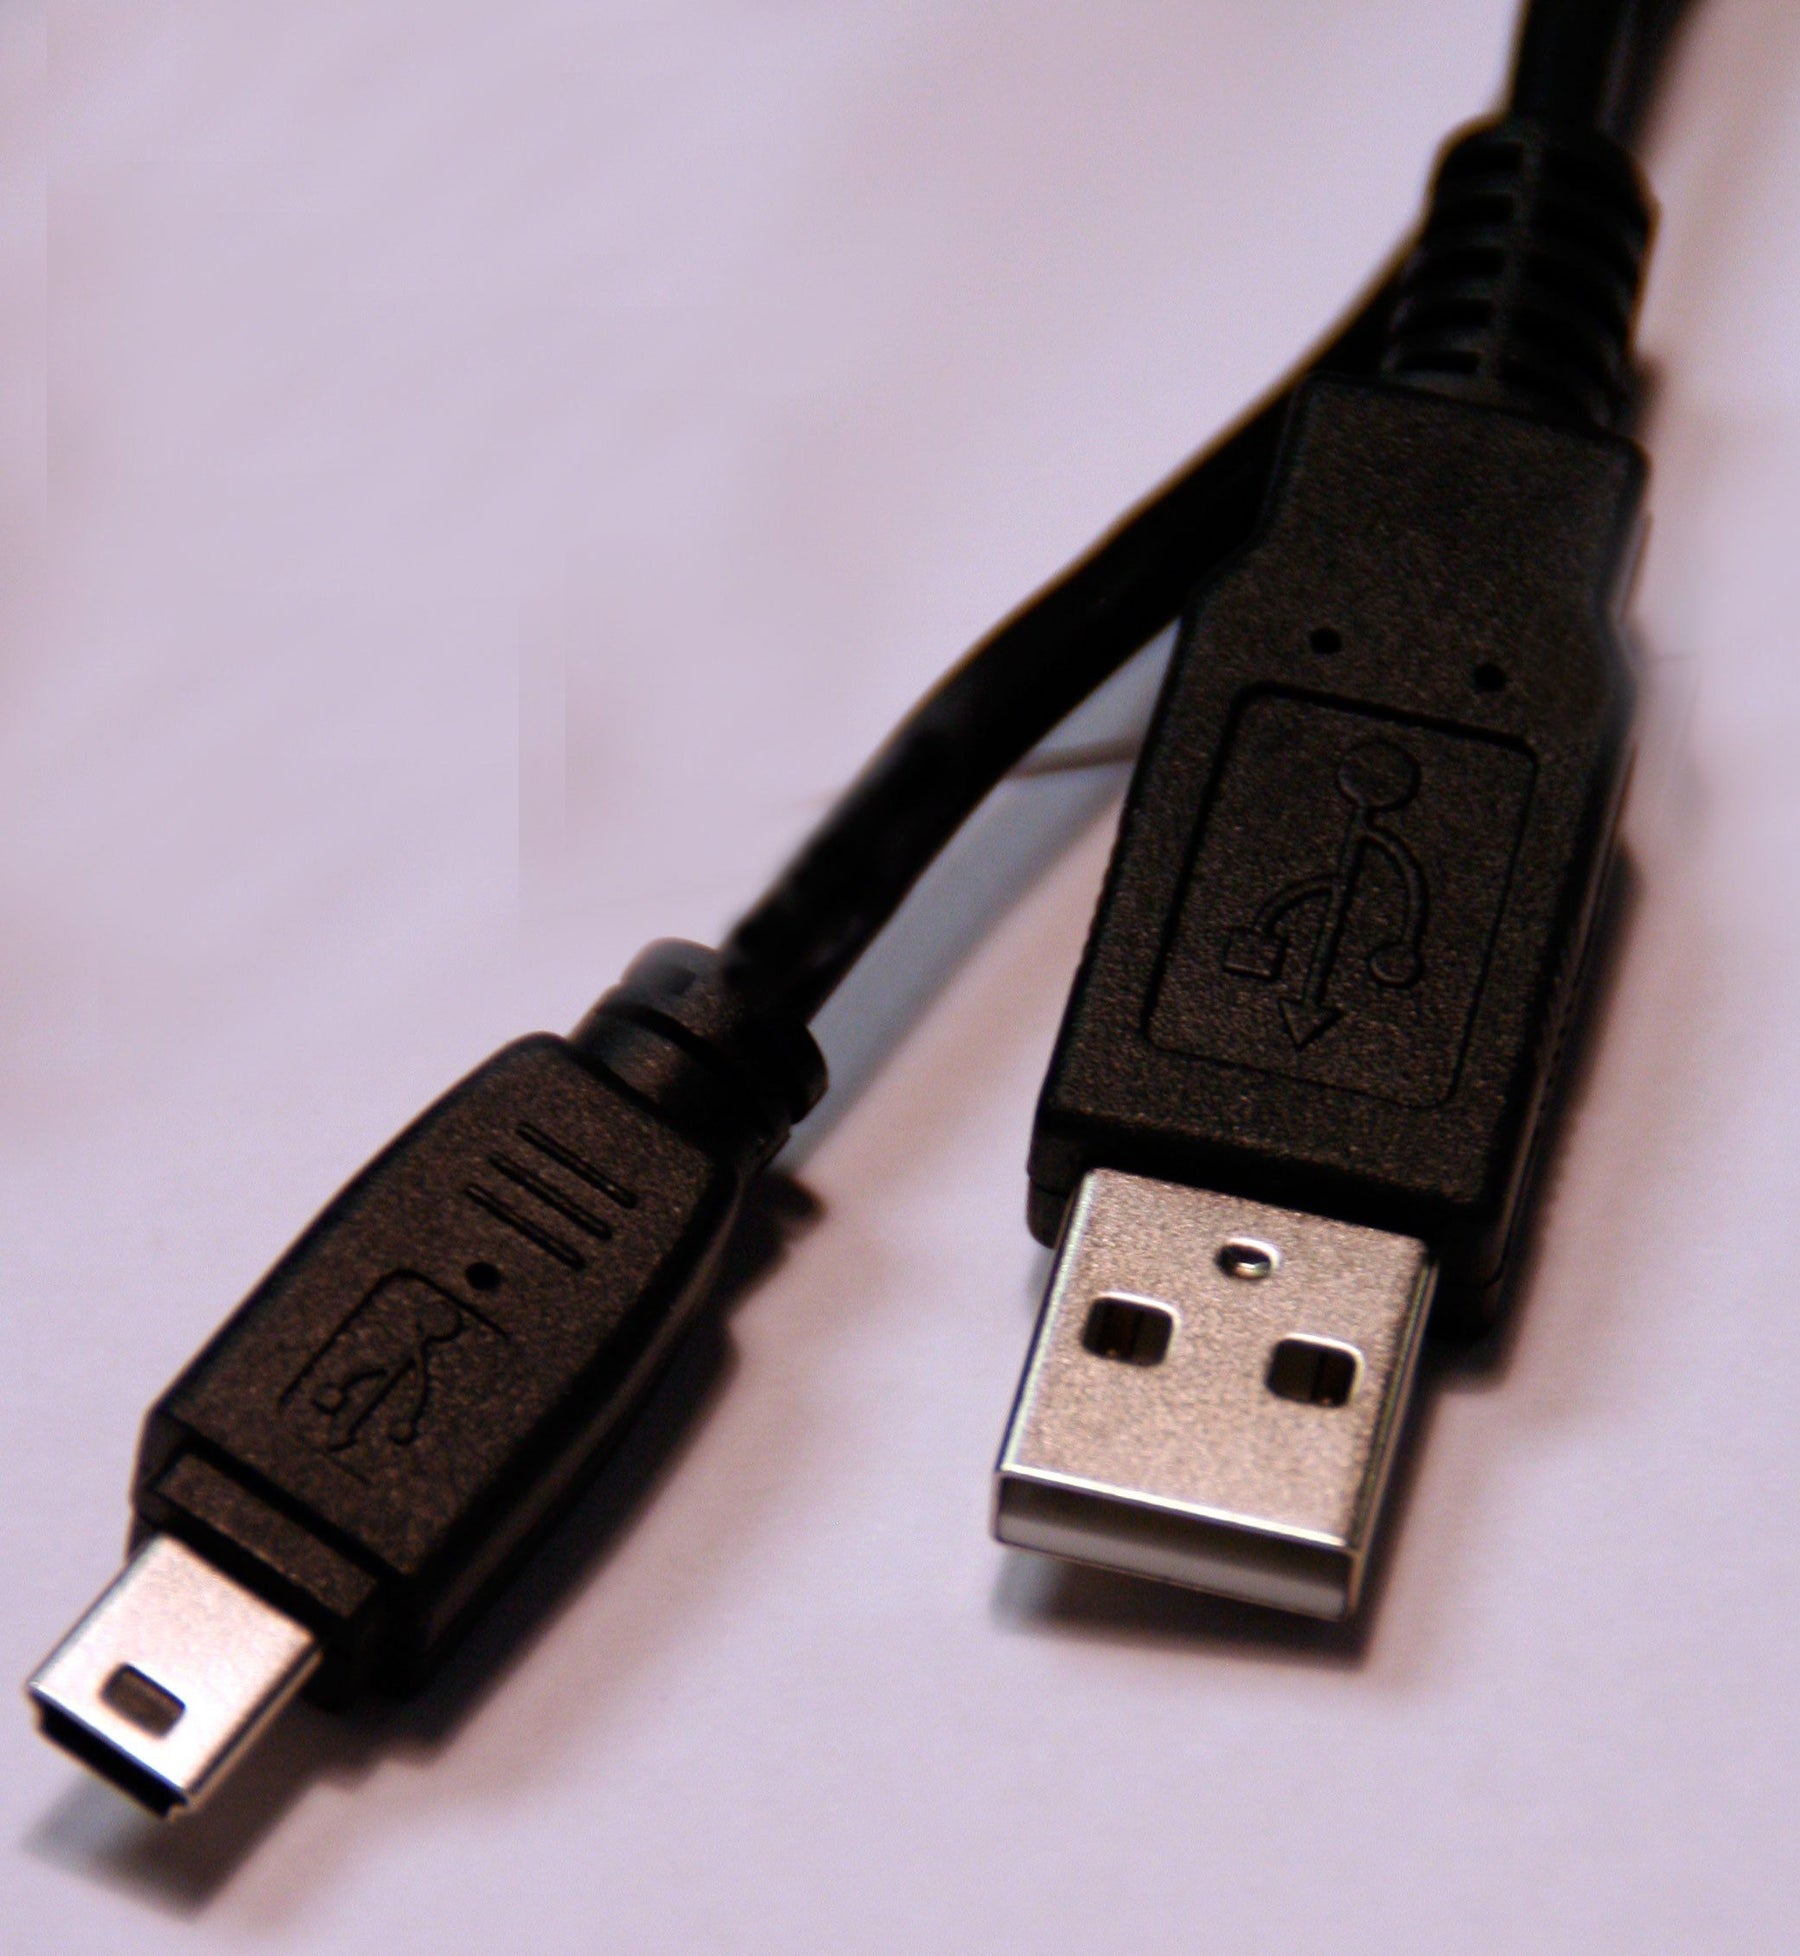 USB lead for Snooper units